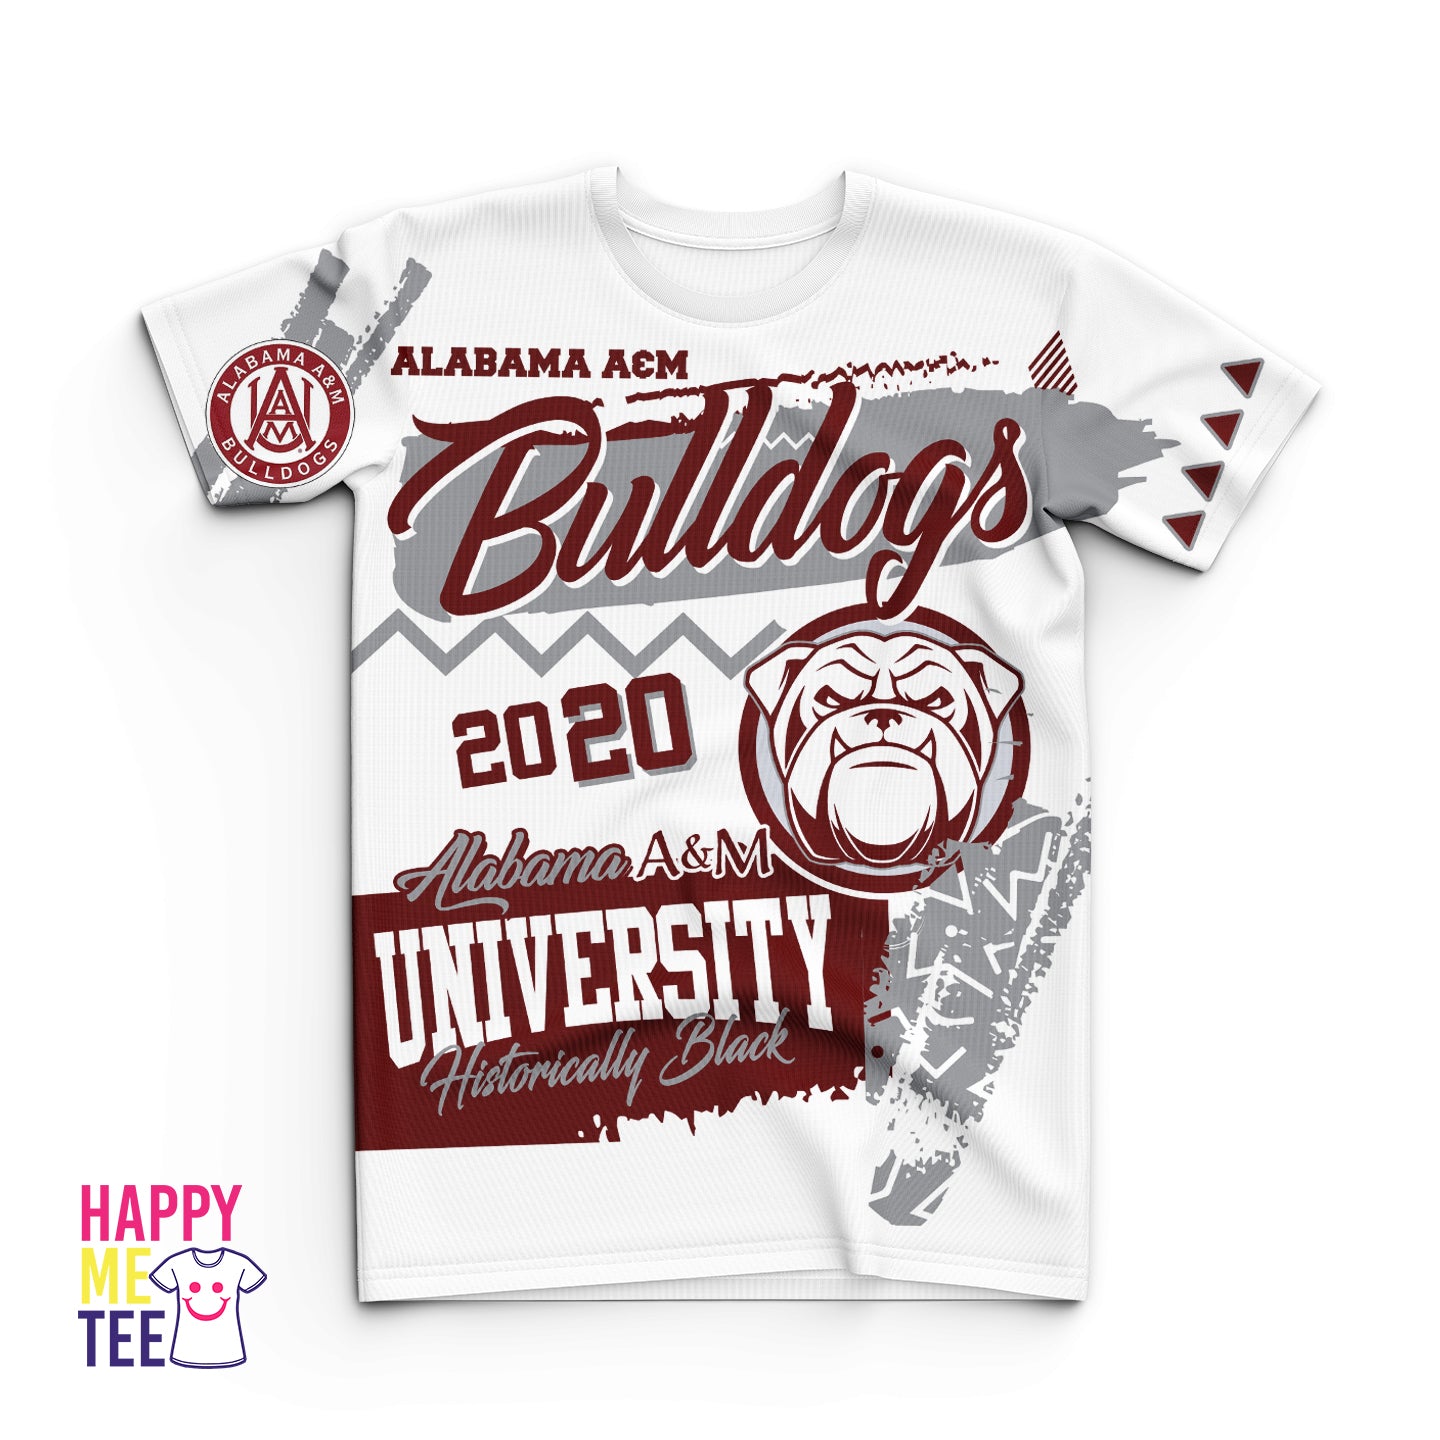 Alabama A&M University Heritage Unisex T-Shirt – Happy Me Tee